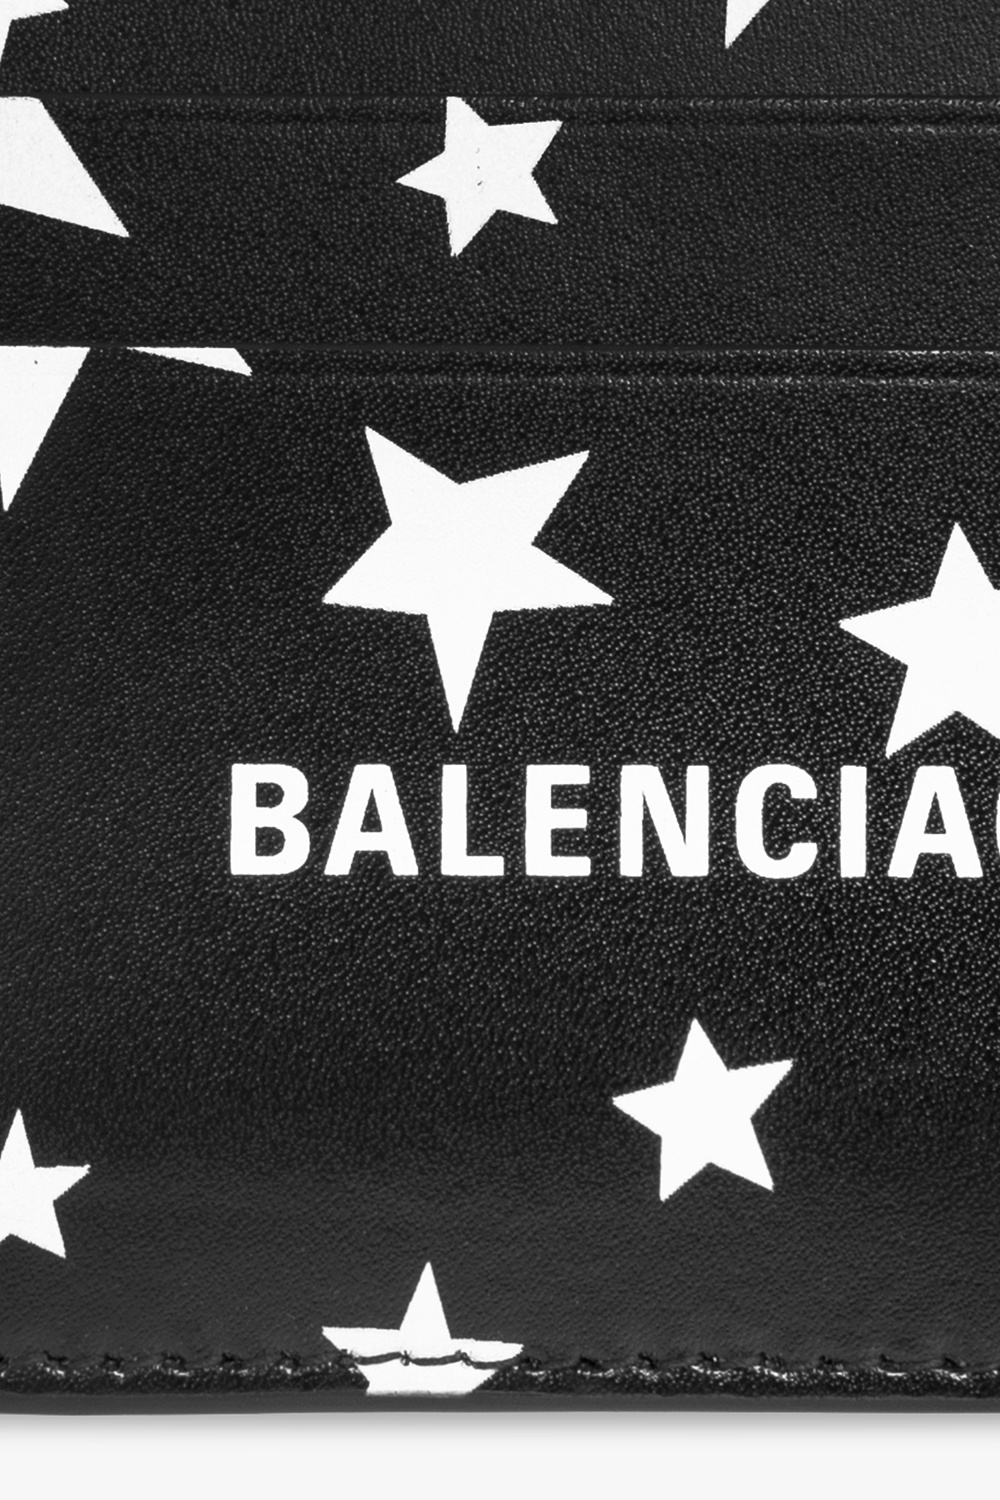 Balenciaga Discover a unique project